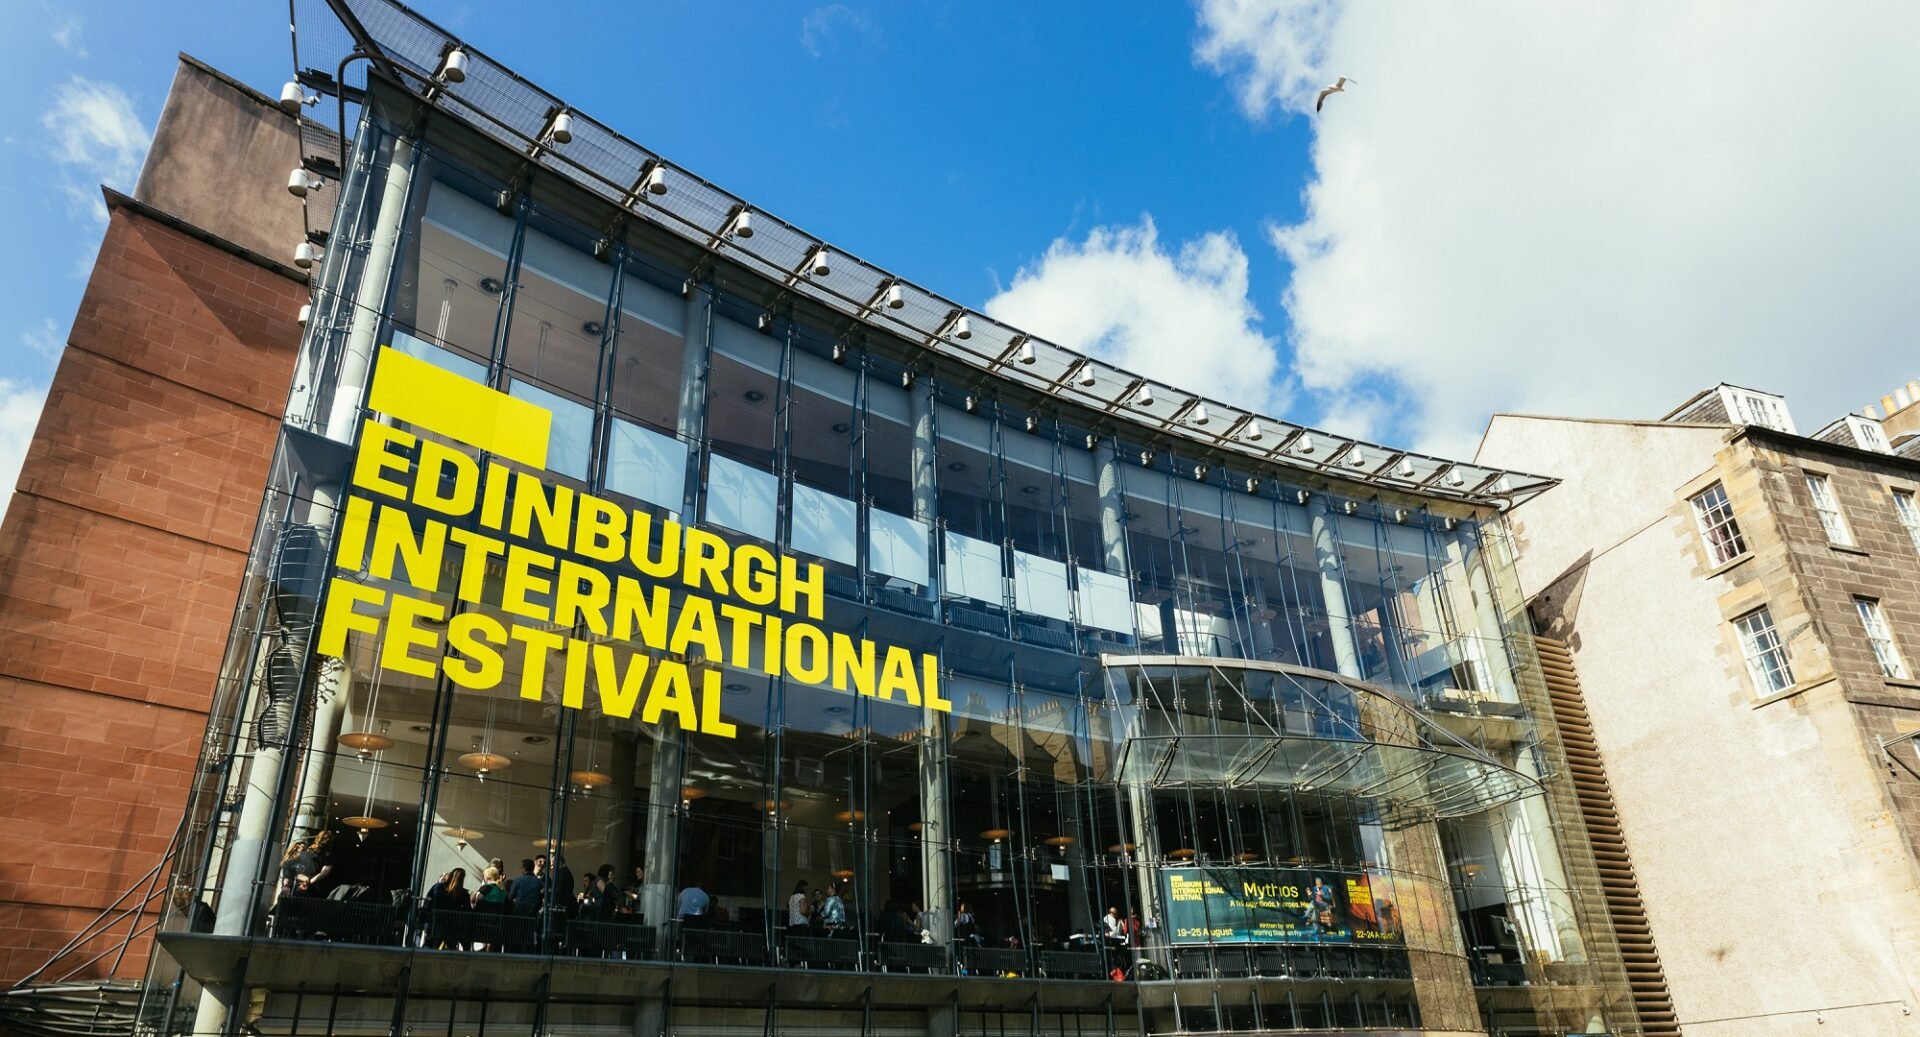 Festival Theatre Edinburgh During International Festival 2019